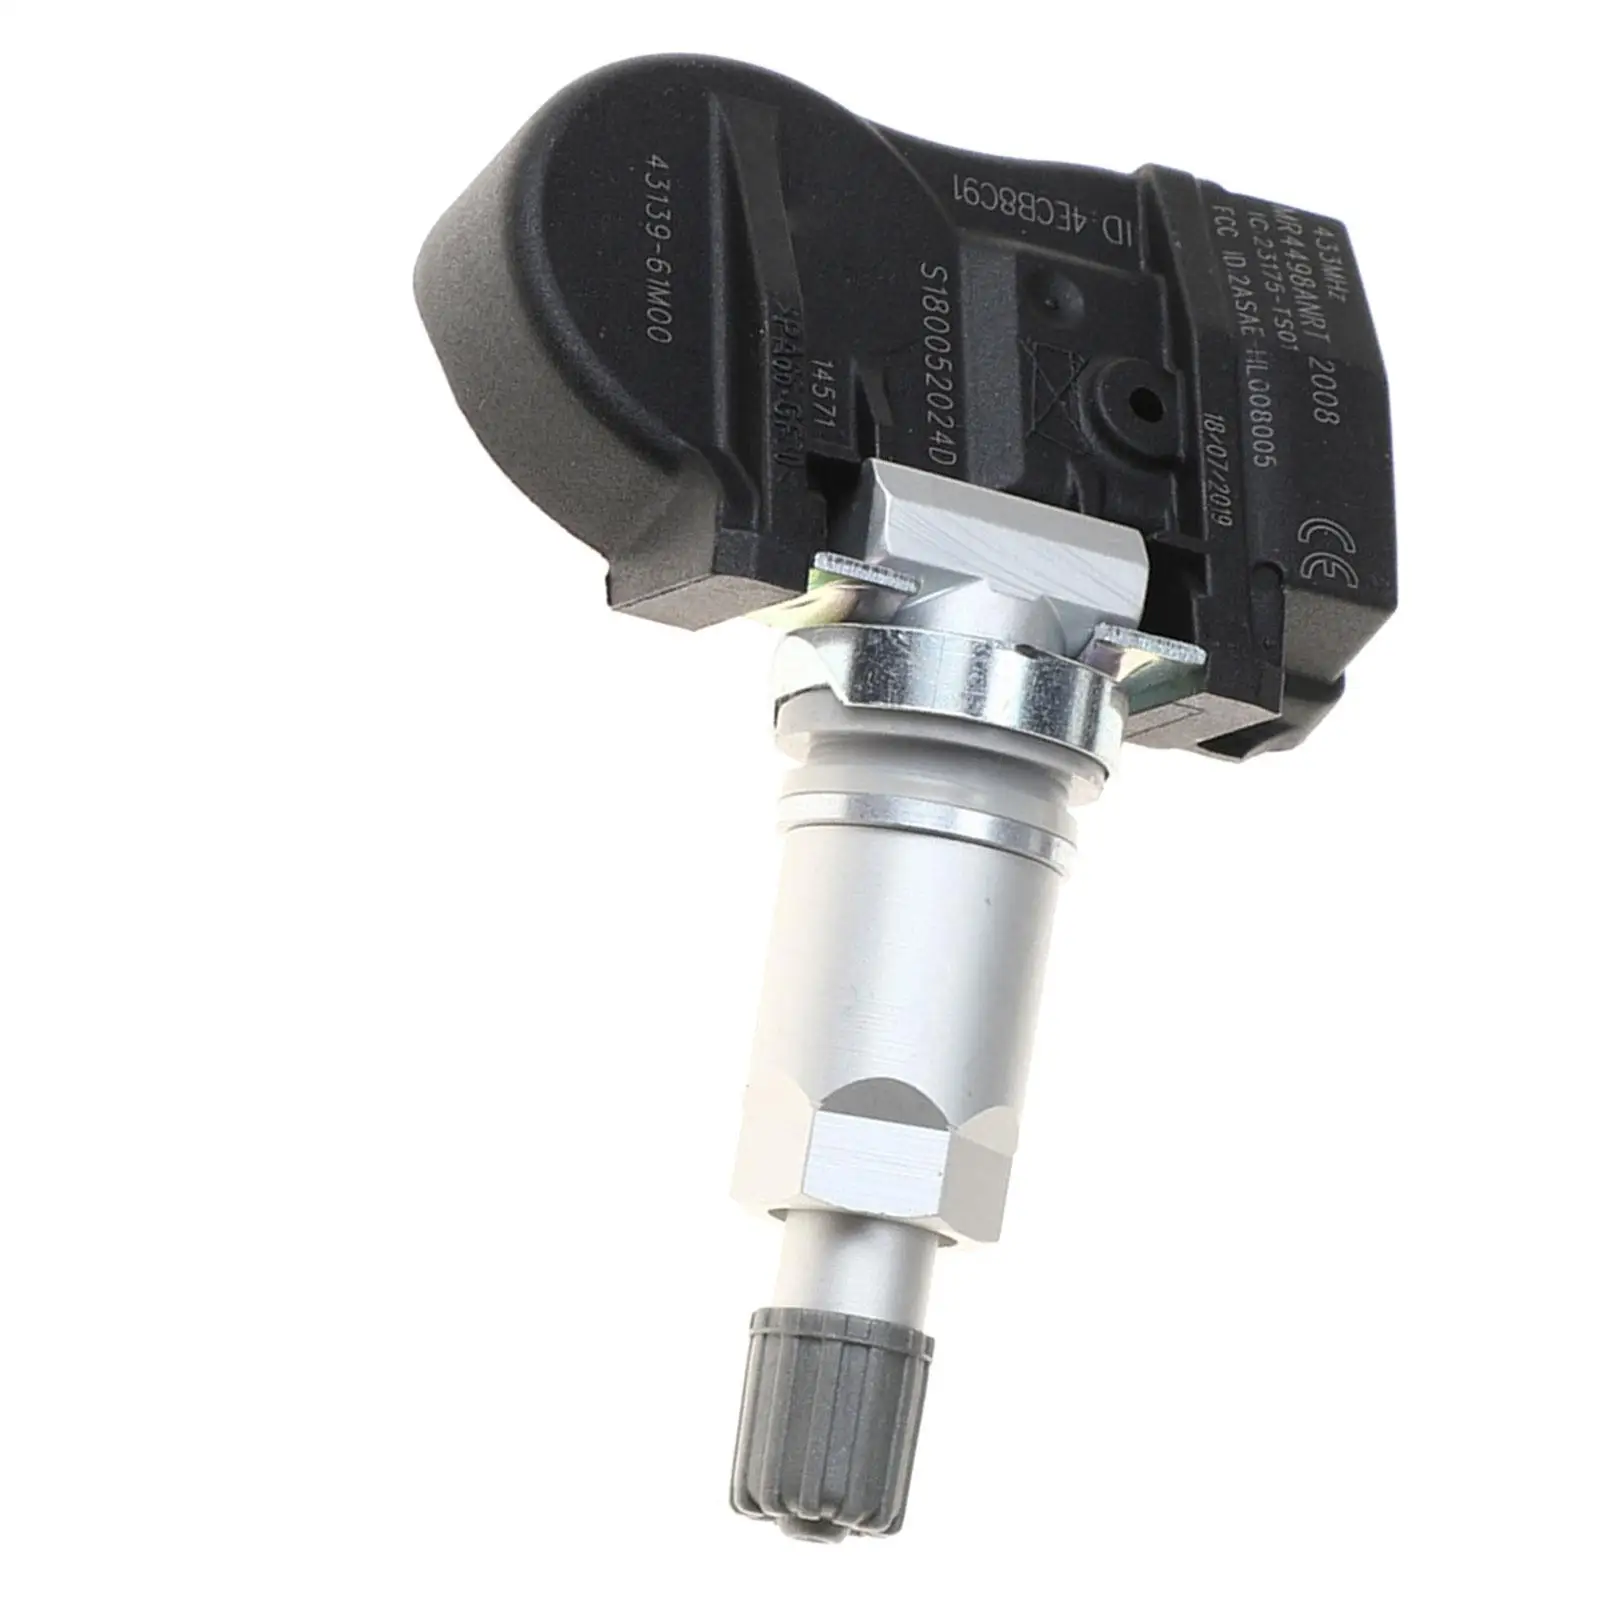 Tire Pressure Monitor Sensor Spare Parts for Suzuki Vitara SX4 S-cross Jimmy Sport Ignis Baleno Swift Long Service Life